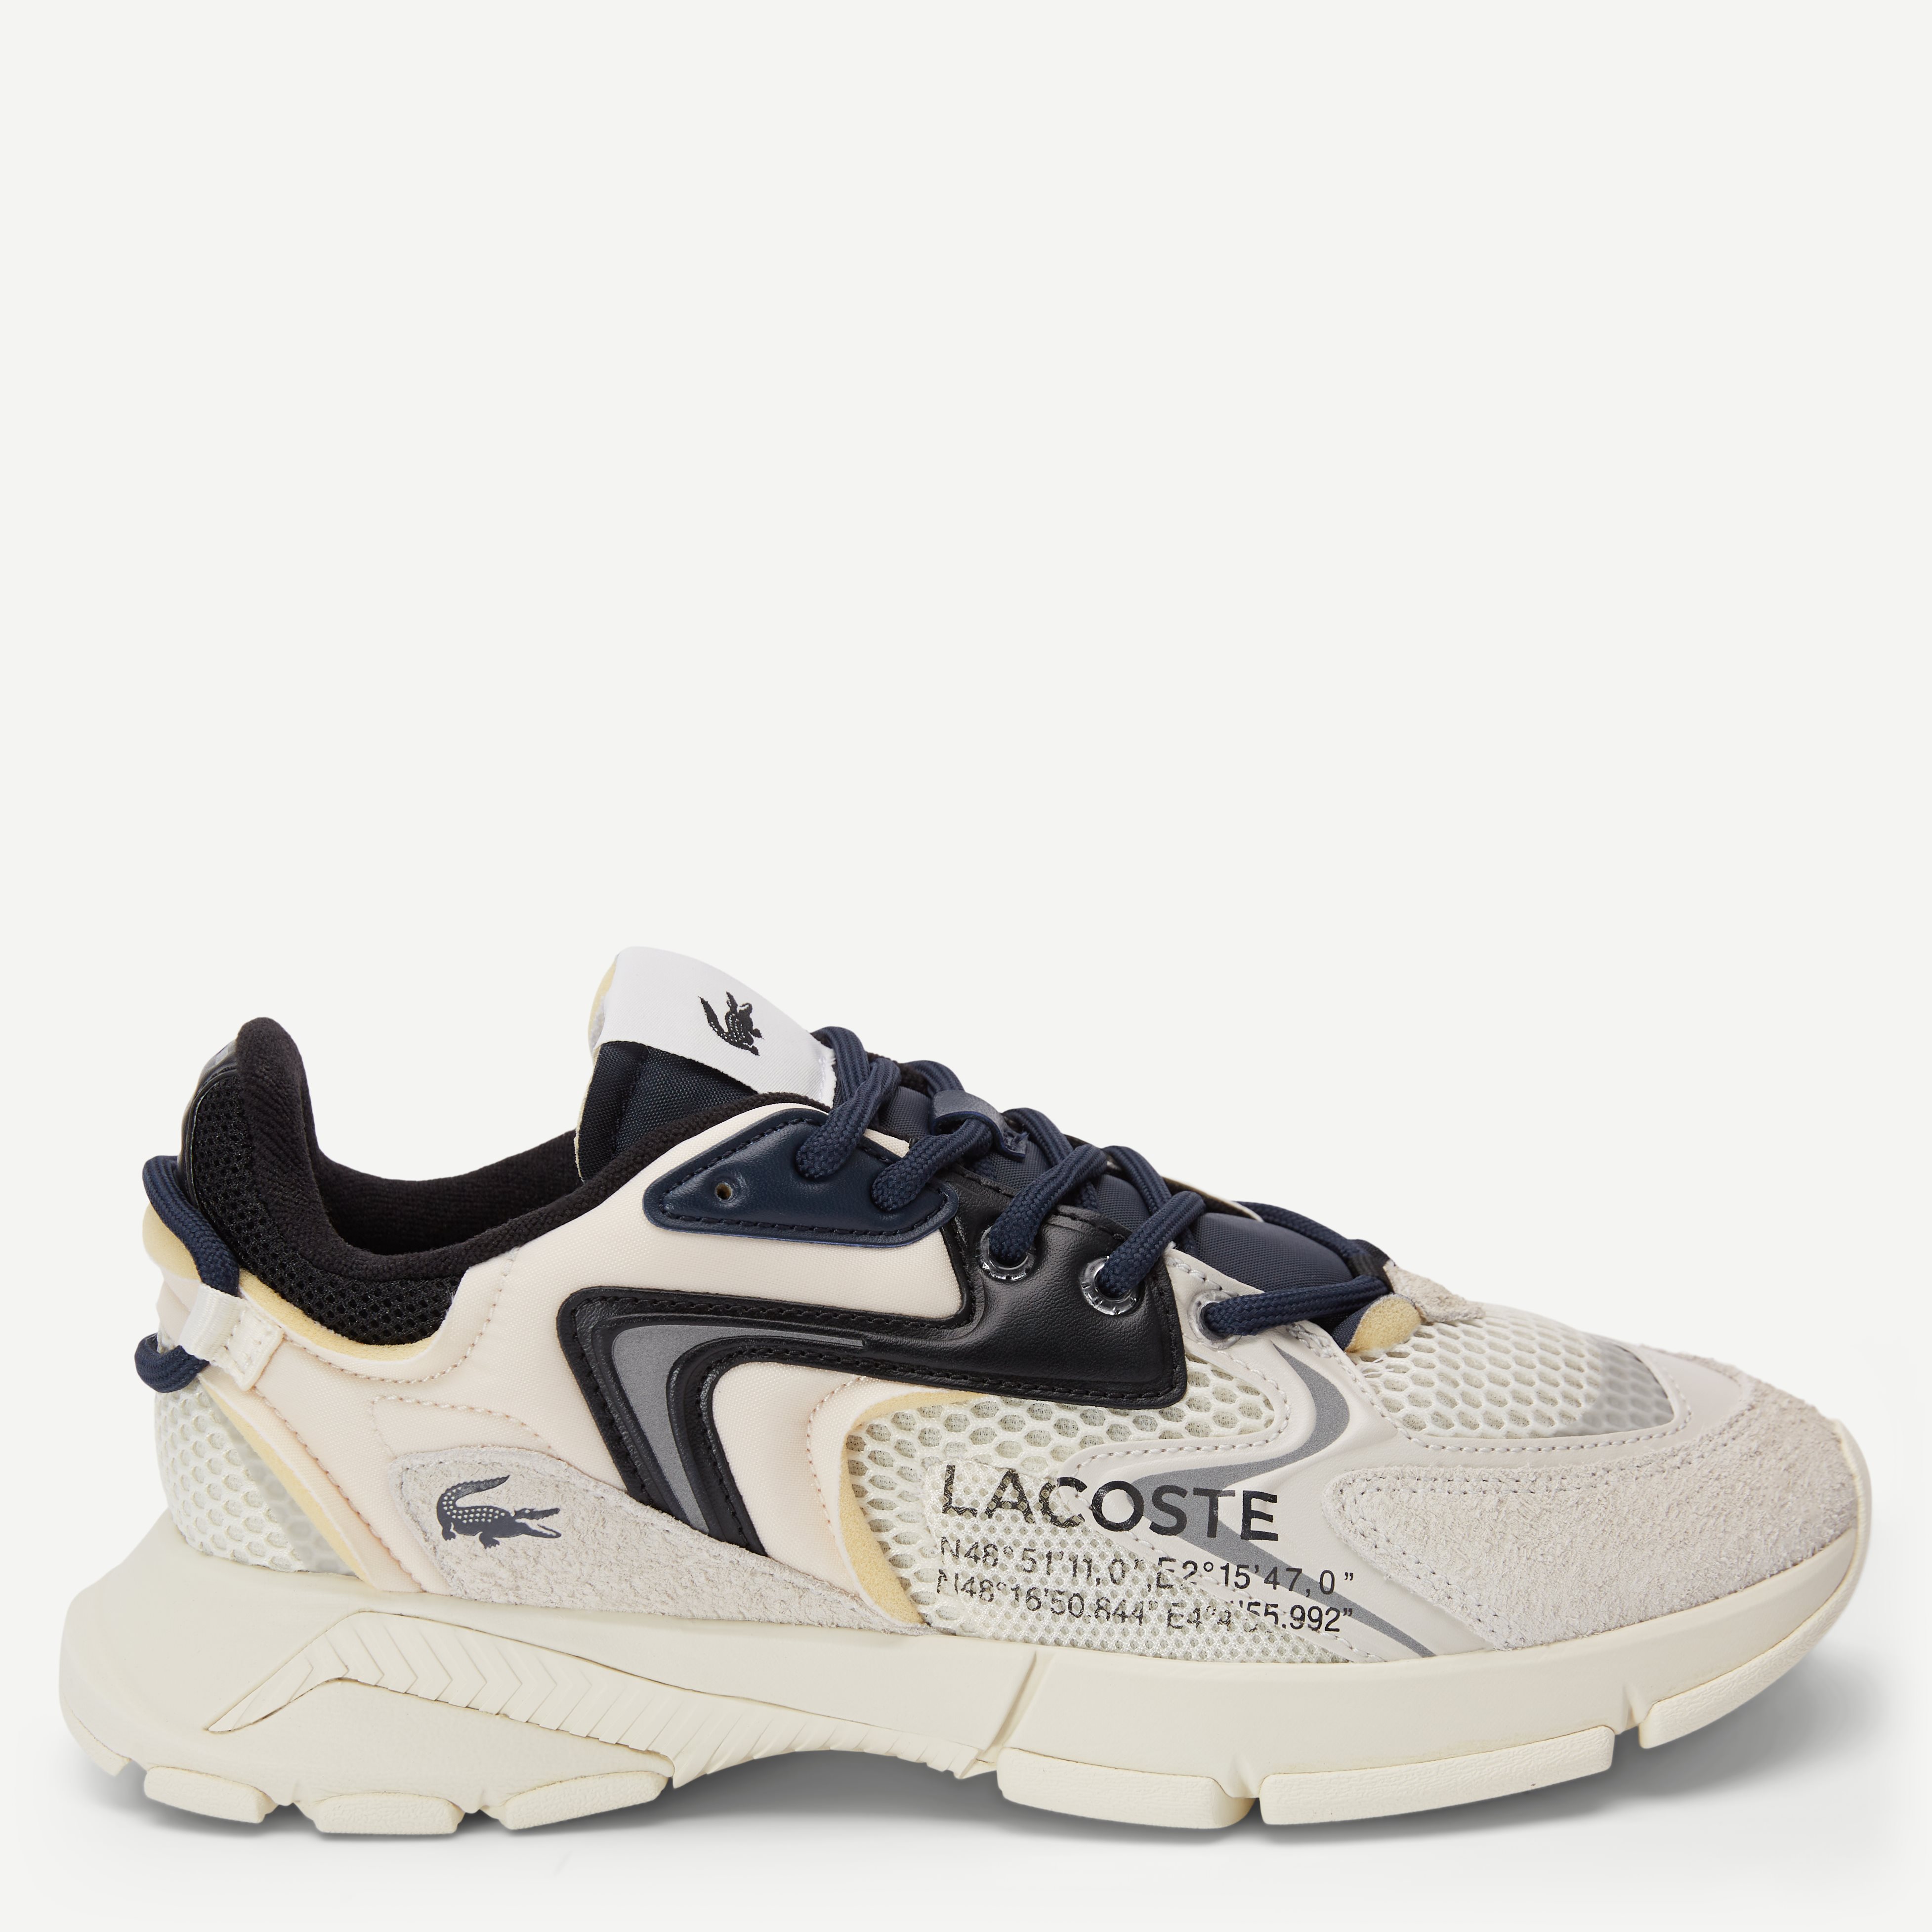 Lacoste Shoes L003 NEO 45SMA0001 2401 White